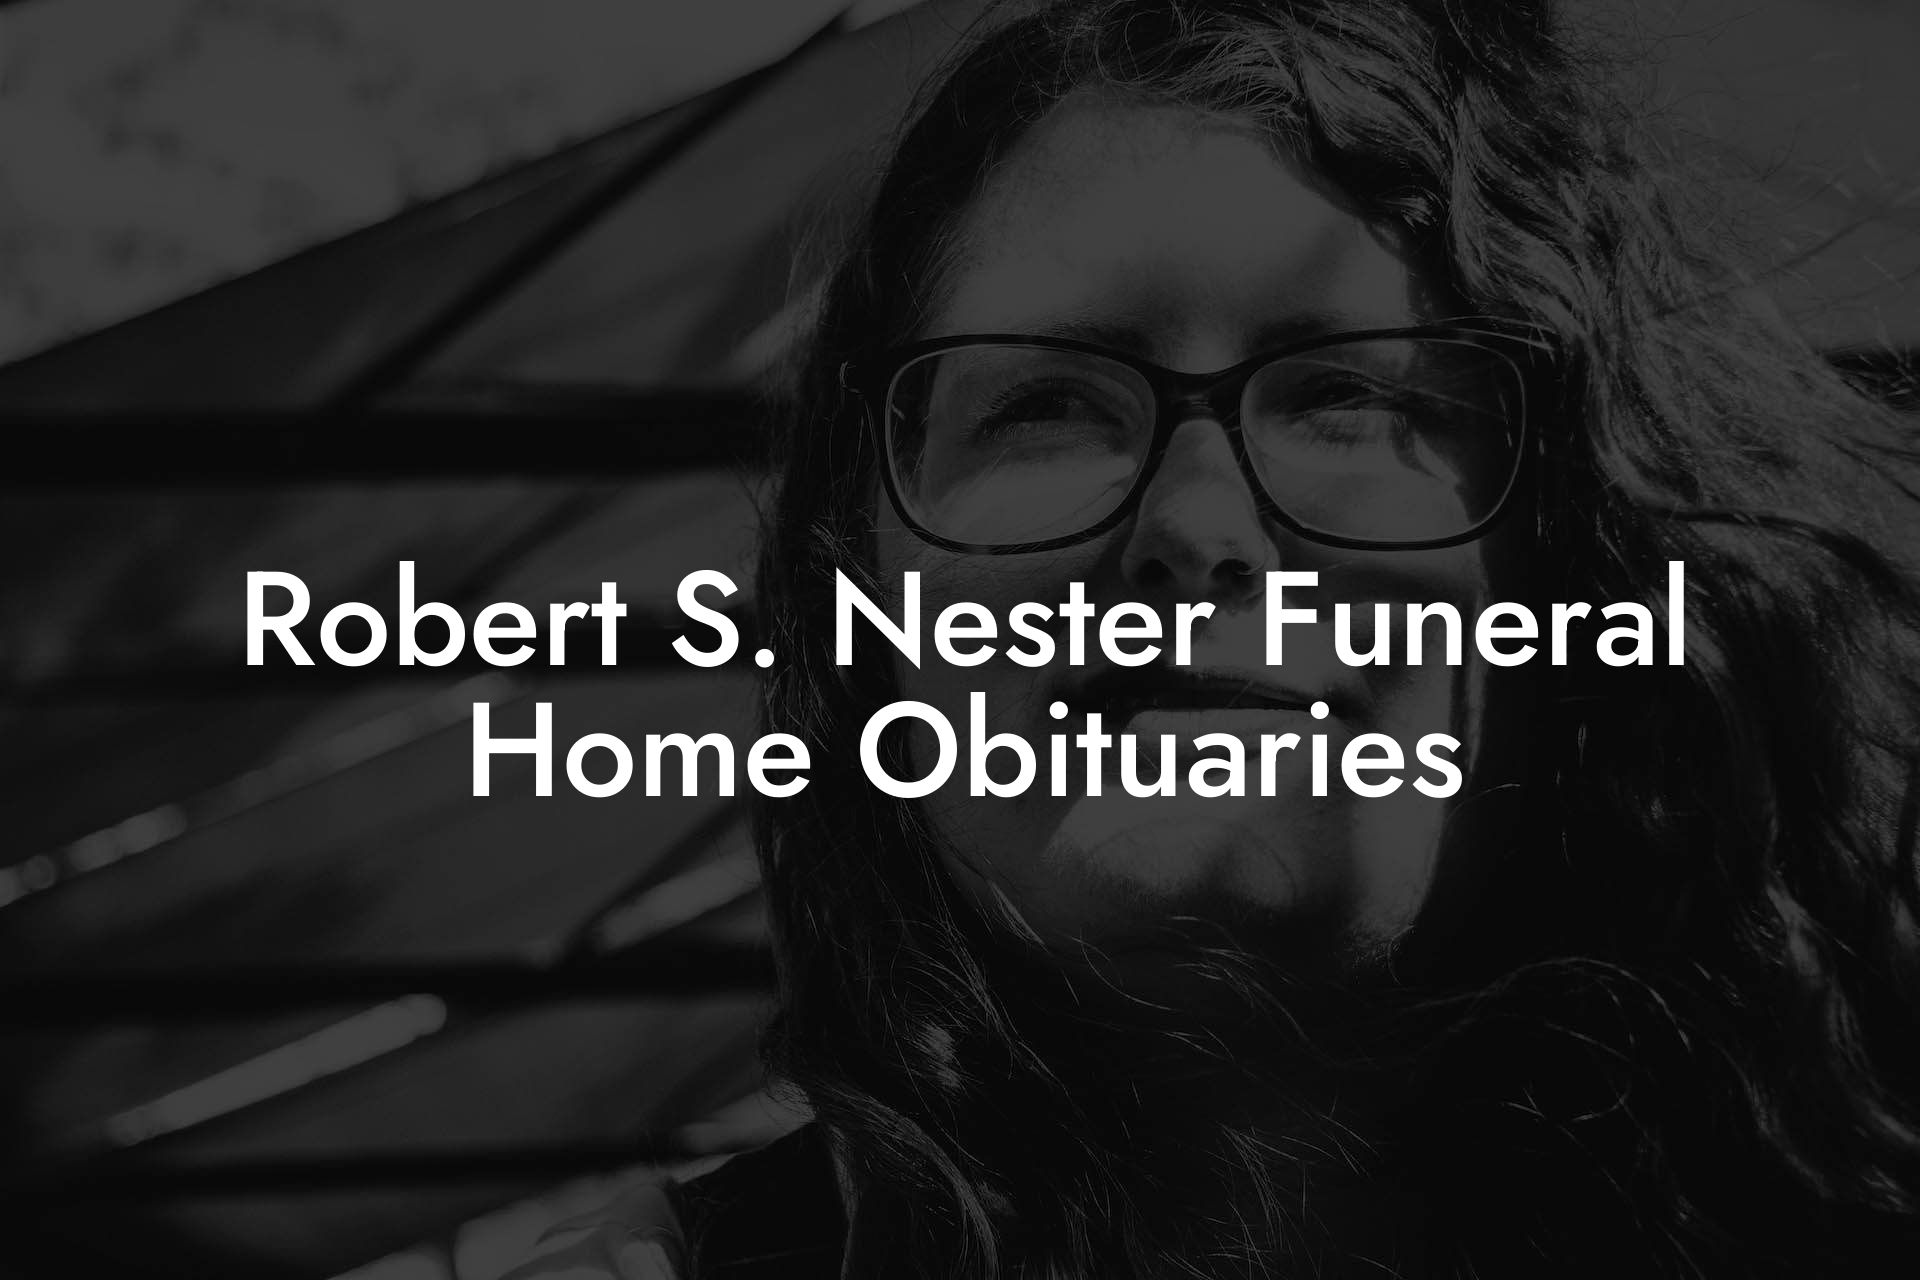 Robert S. Nester Funeral Home Obituaries